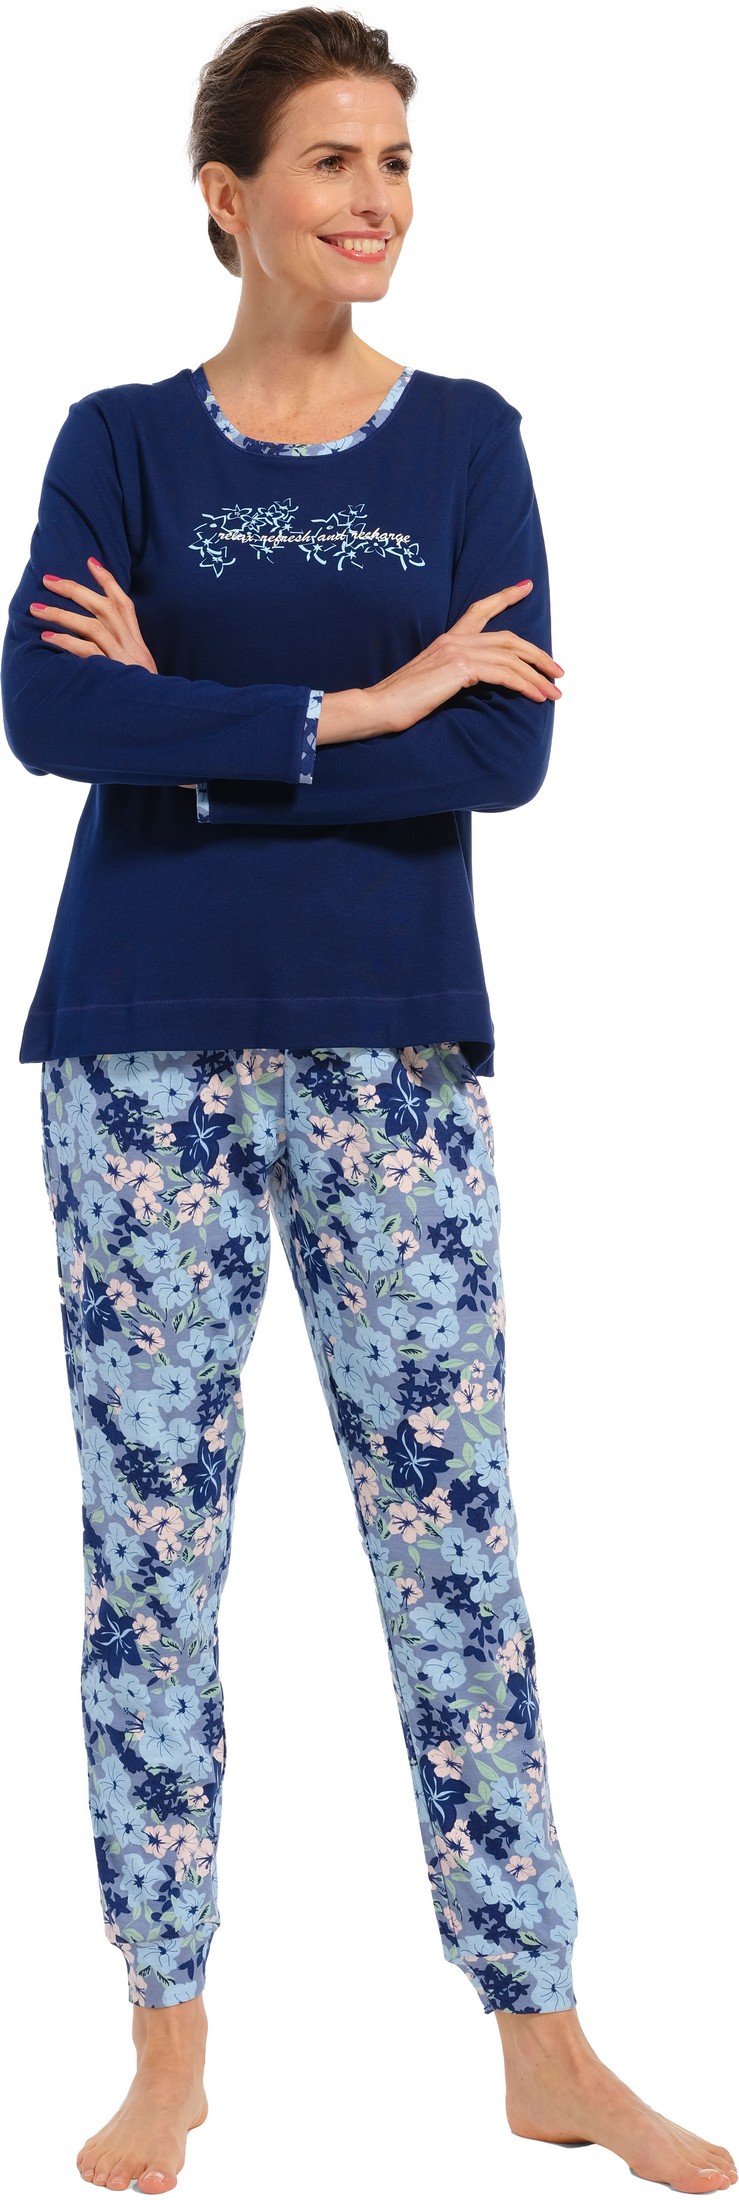 Pastunette dames pyjama 20232-130-3 - Blauw - 46